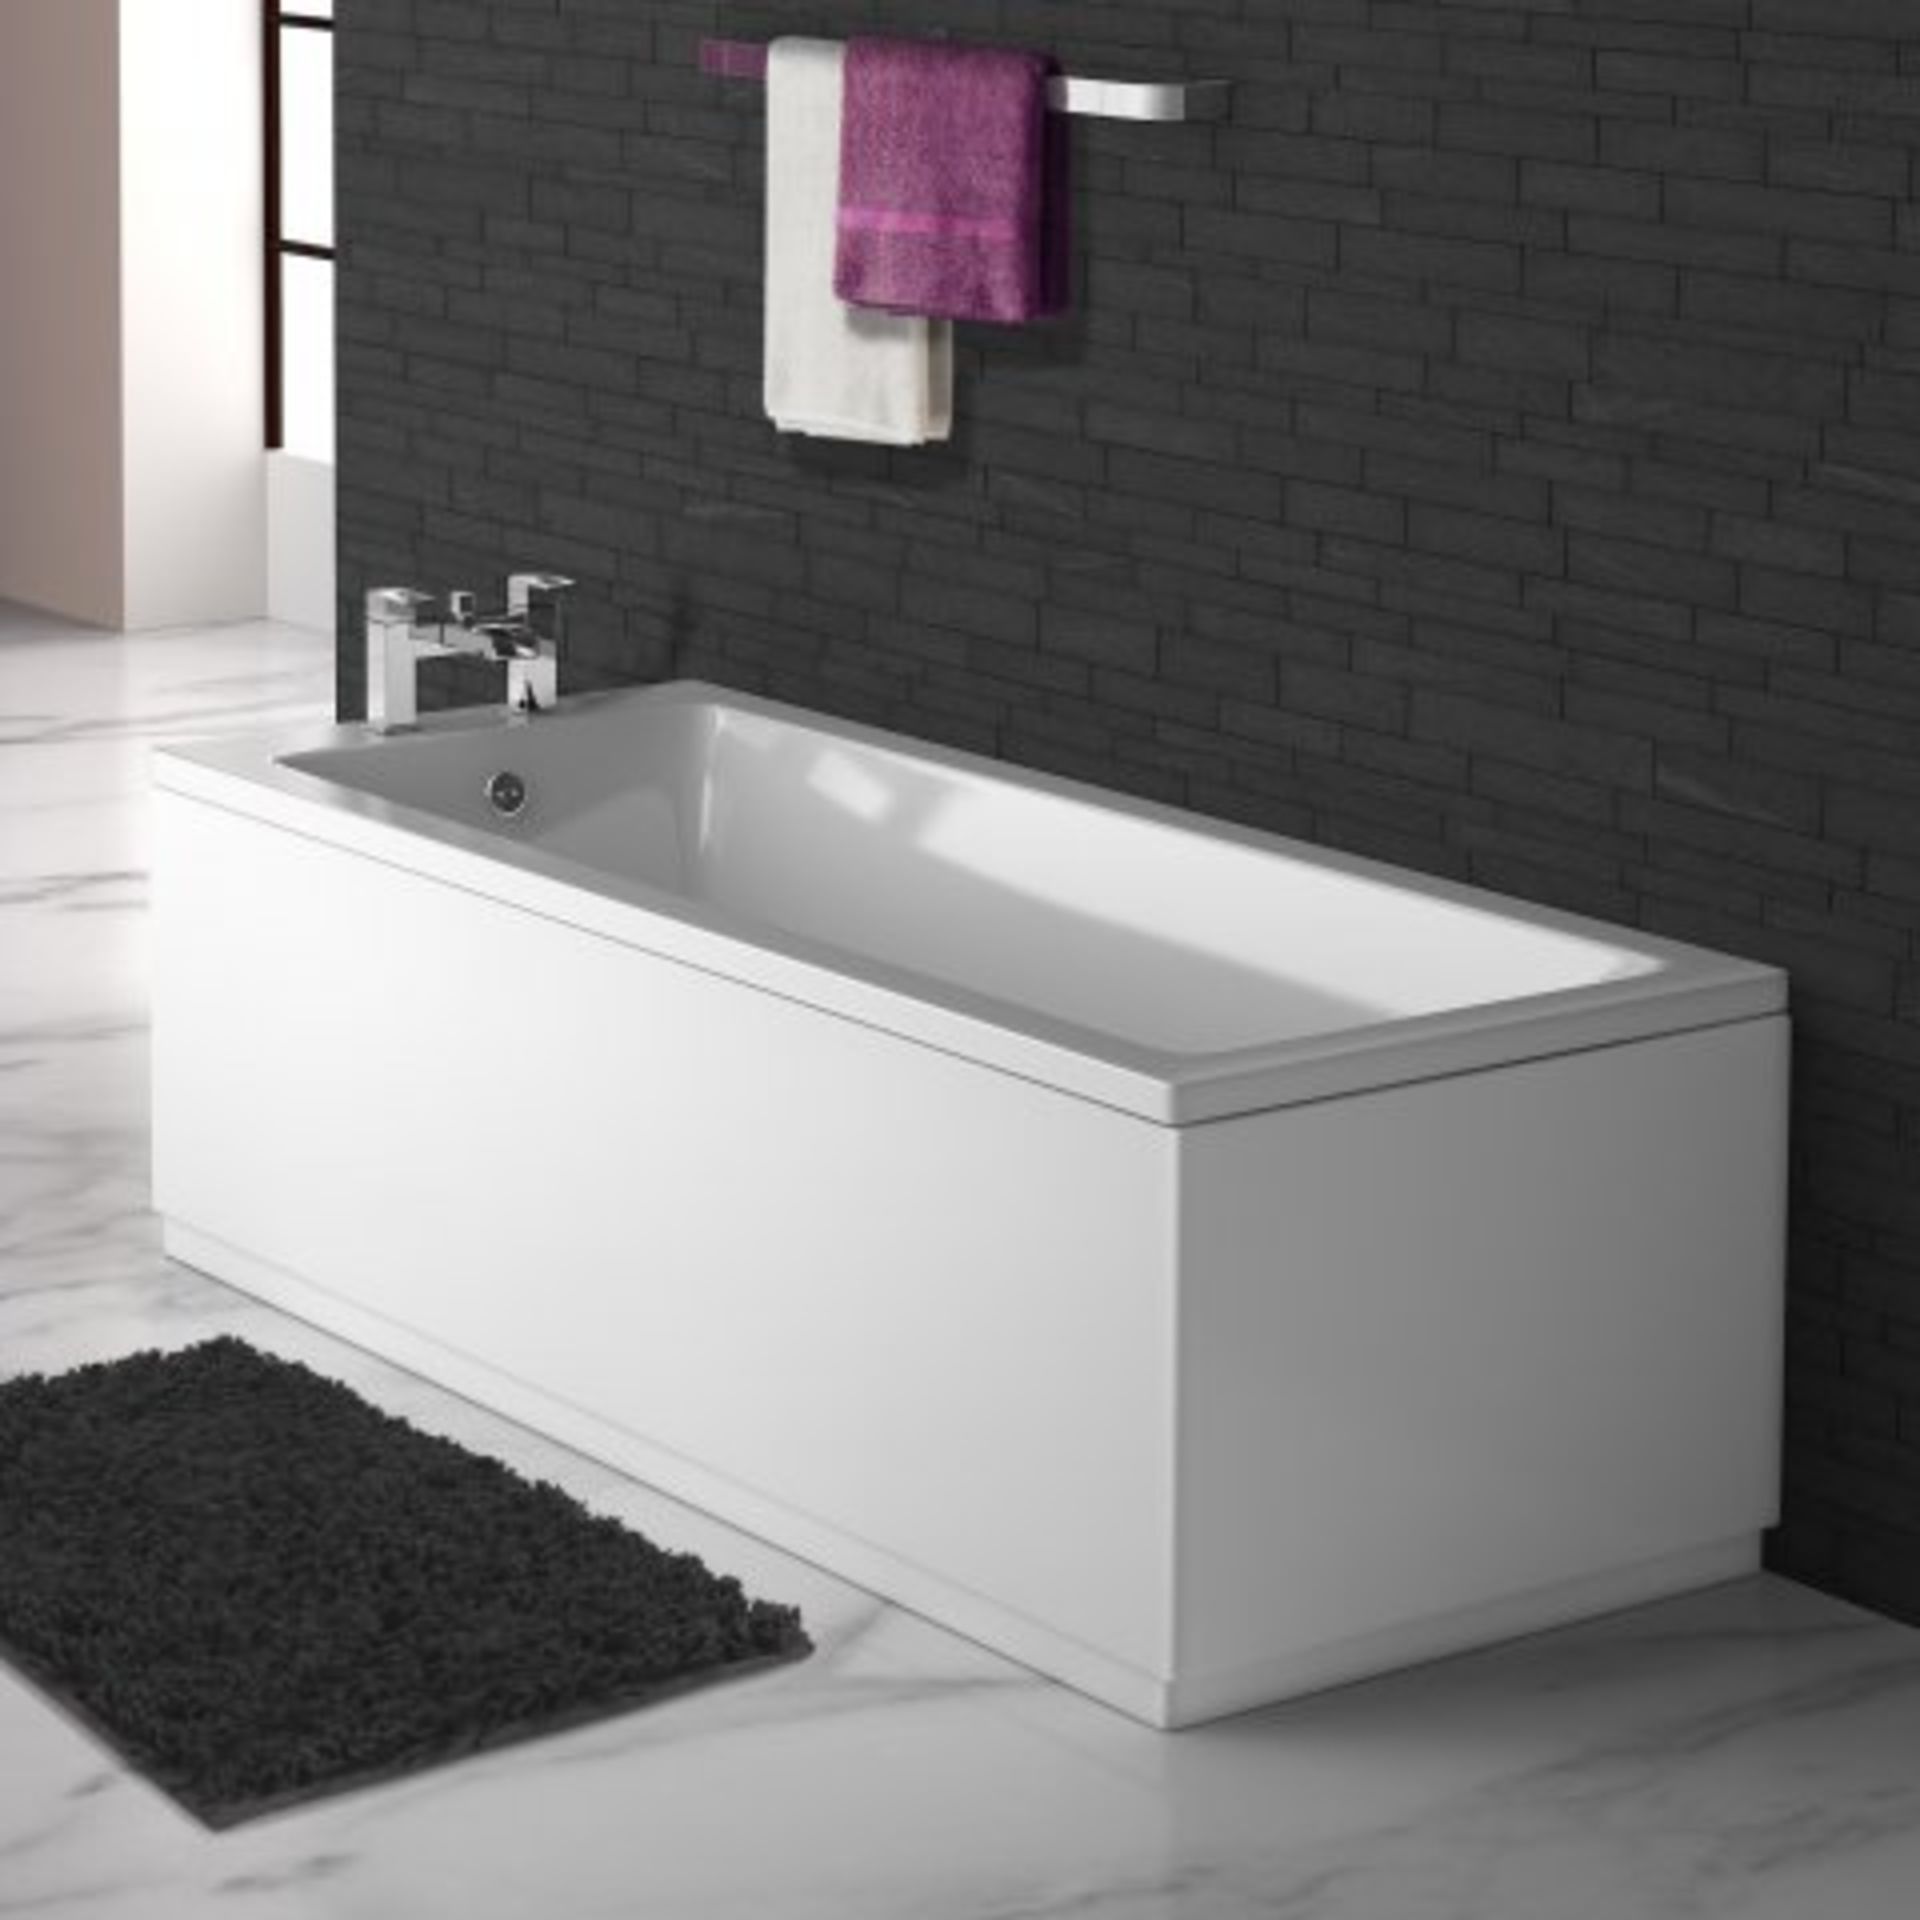 (J216) 1800x800x540mm Square Single Ended Bath. RRP £303.98. This brilliant white straight bath